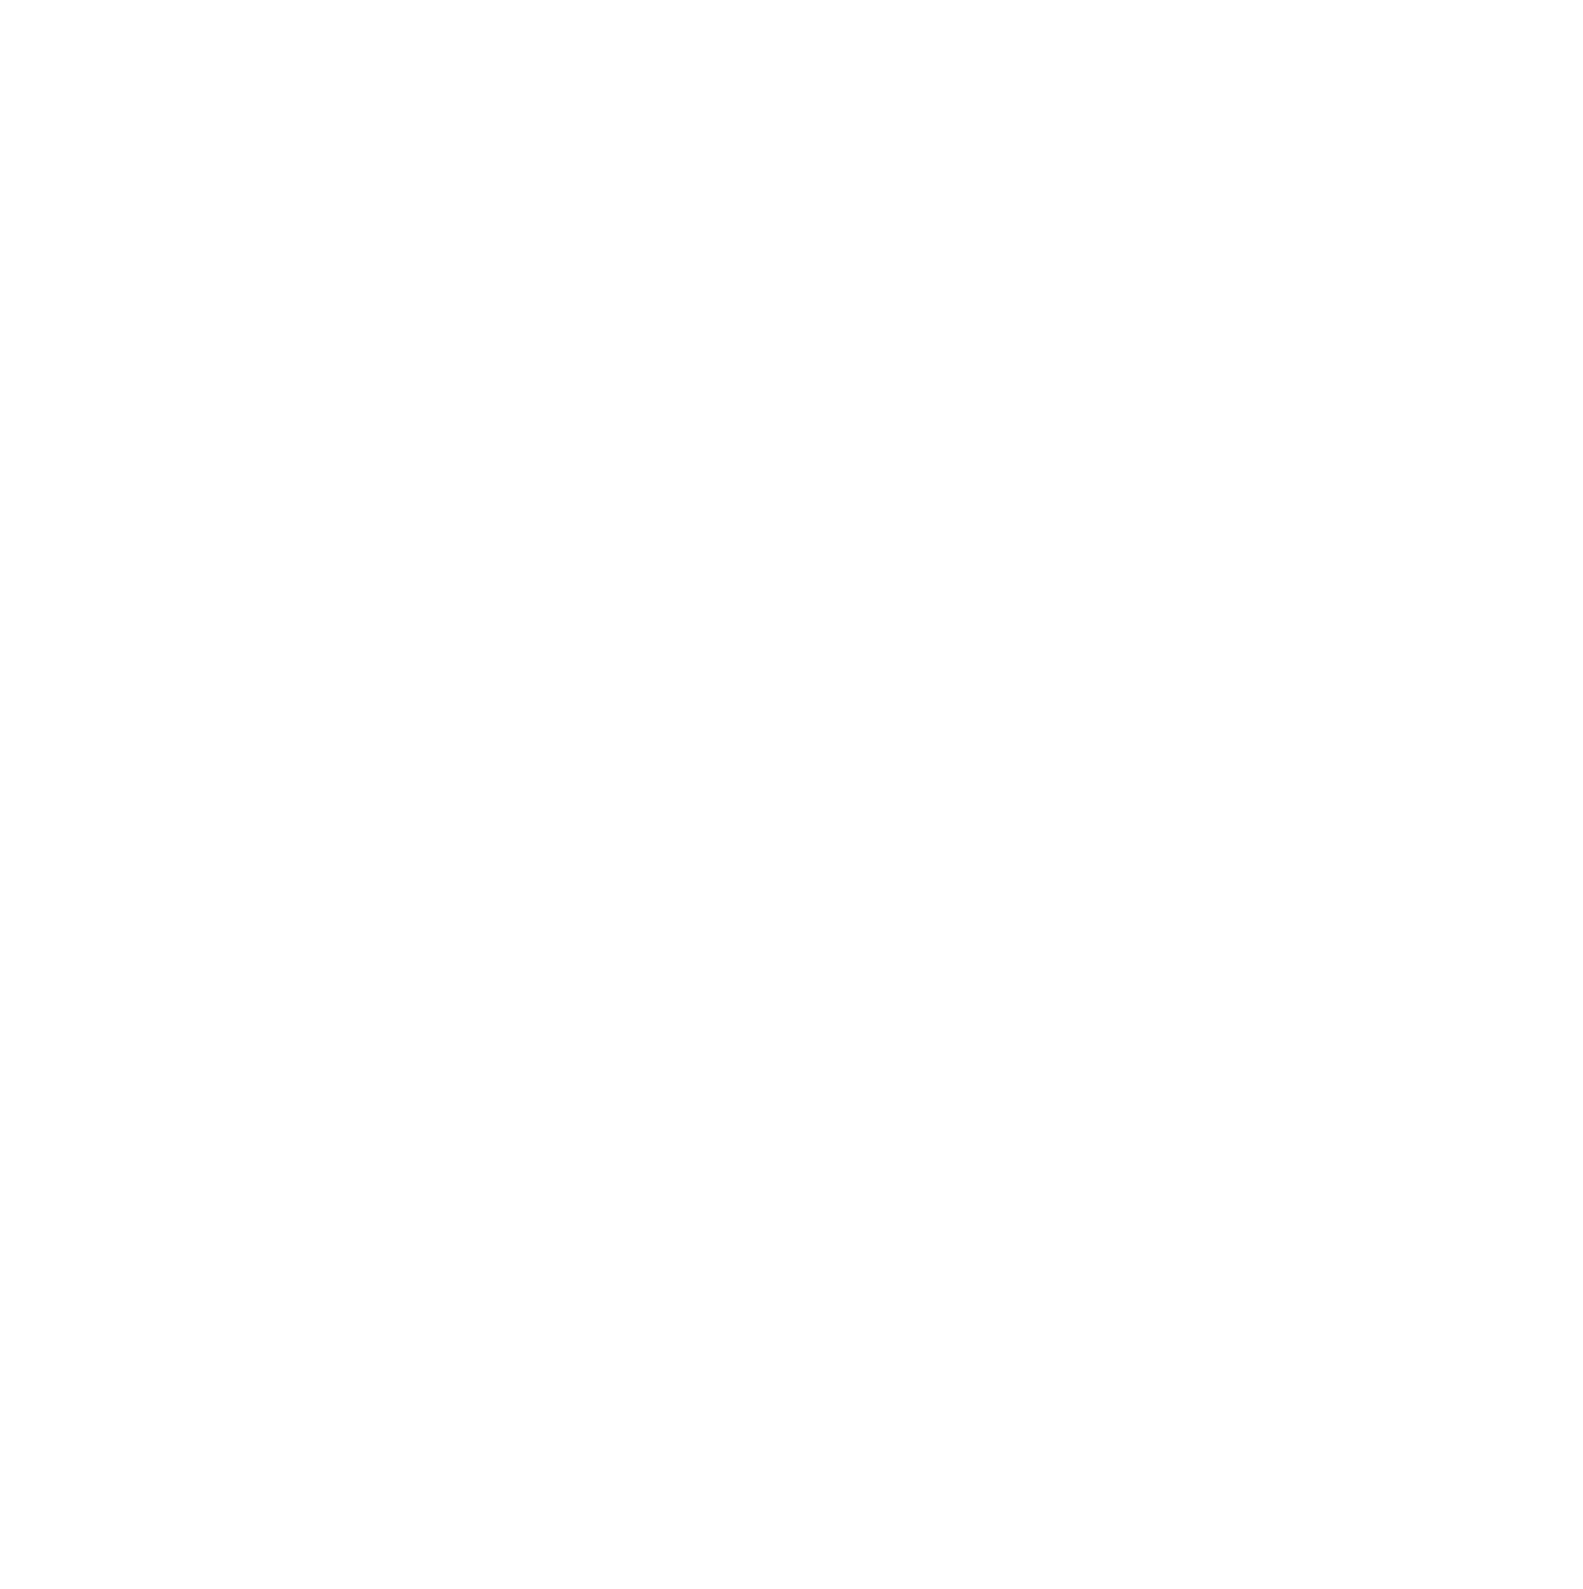 Quaker Houghton logo pour fonds sombres (PNG transparent)